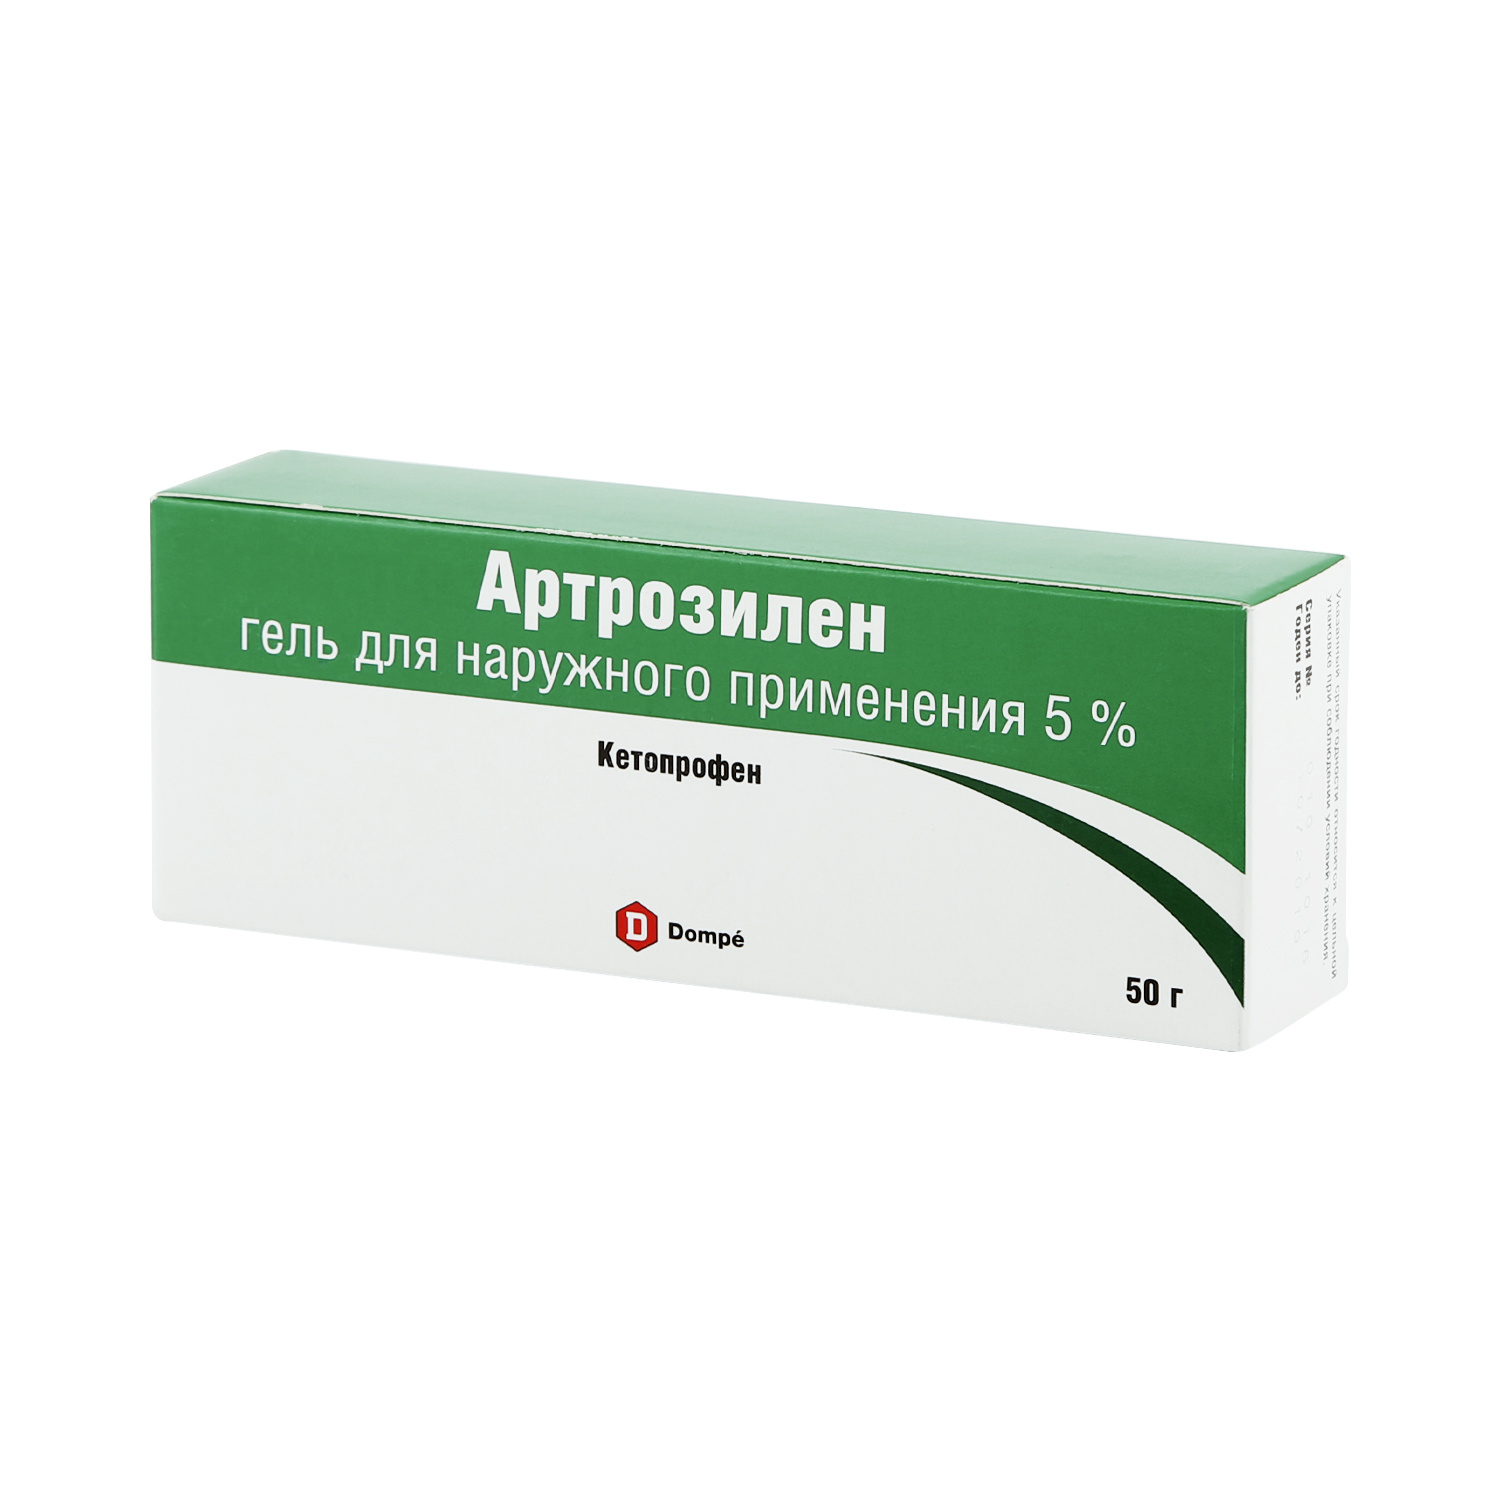 Купить Артрозилен гель 5% 50г, Dompe Farmaceutici SPA